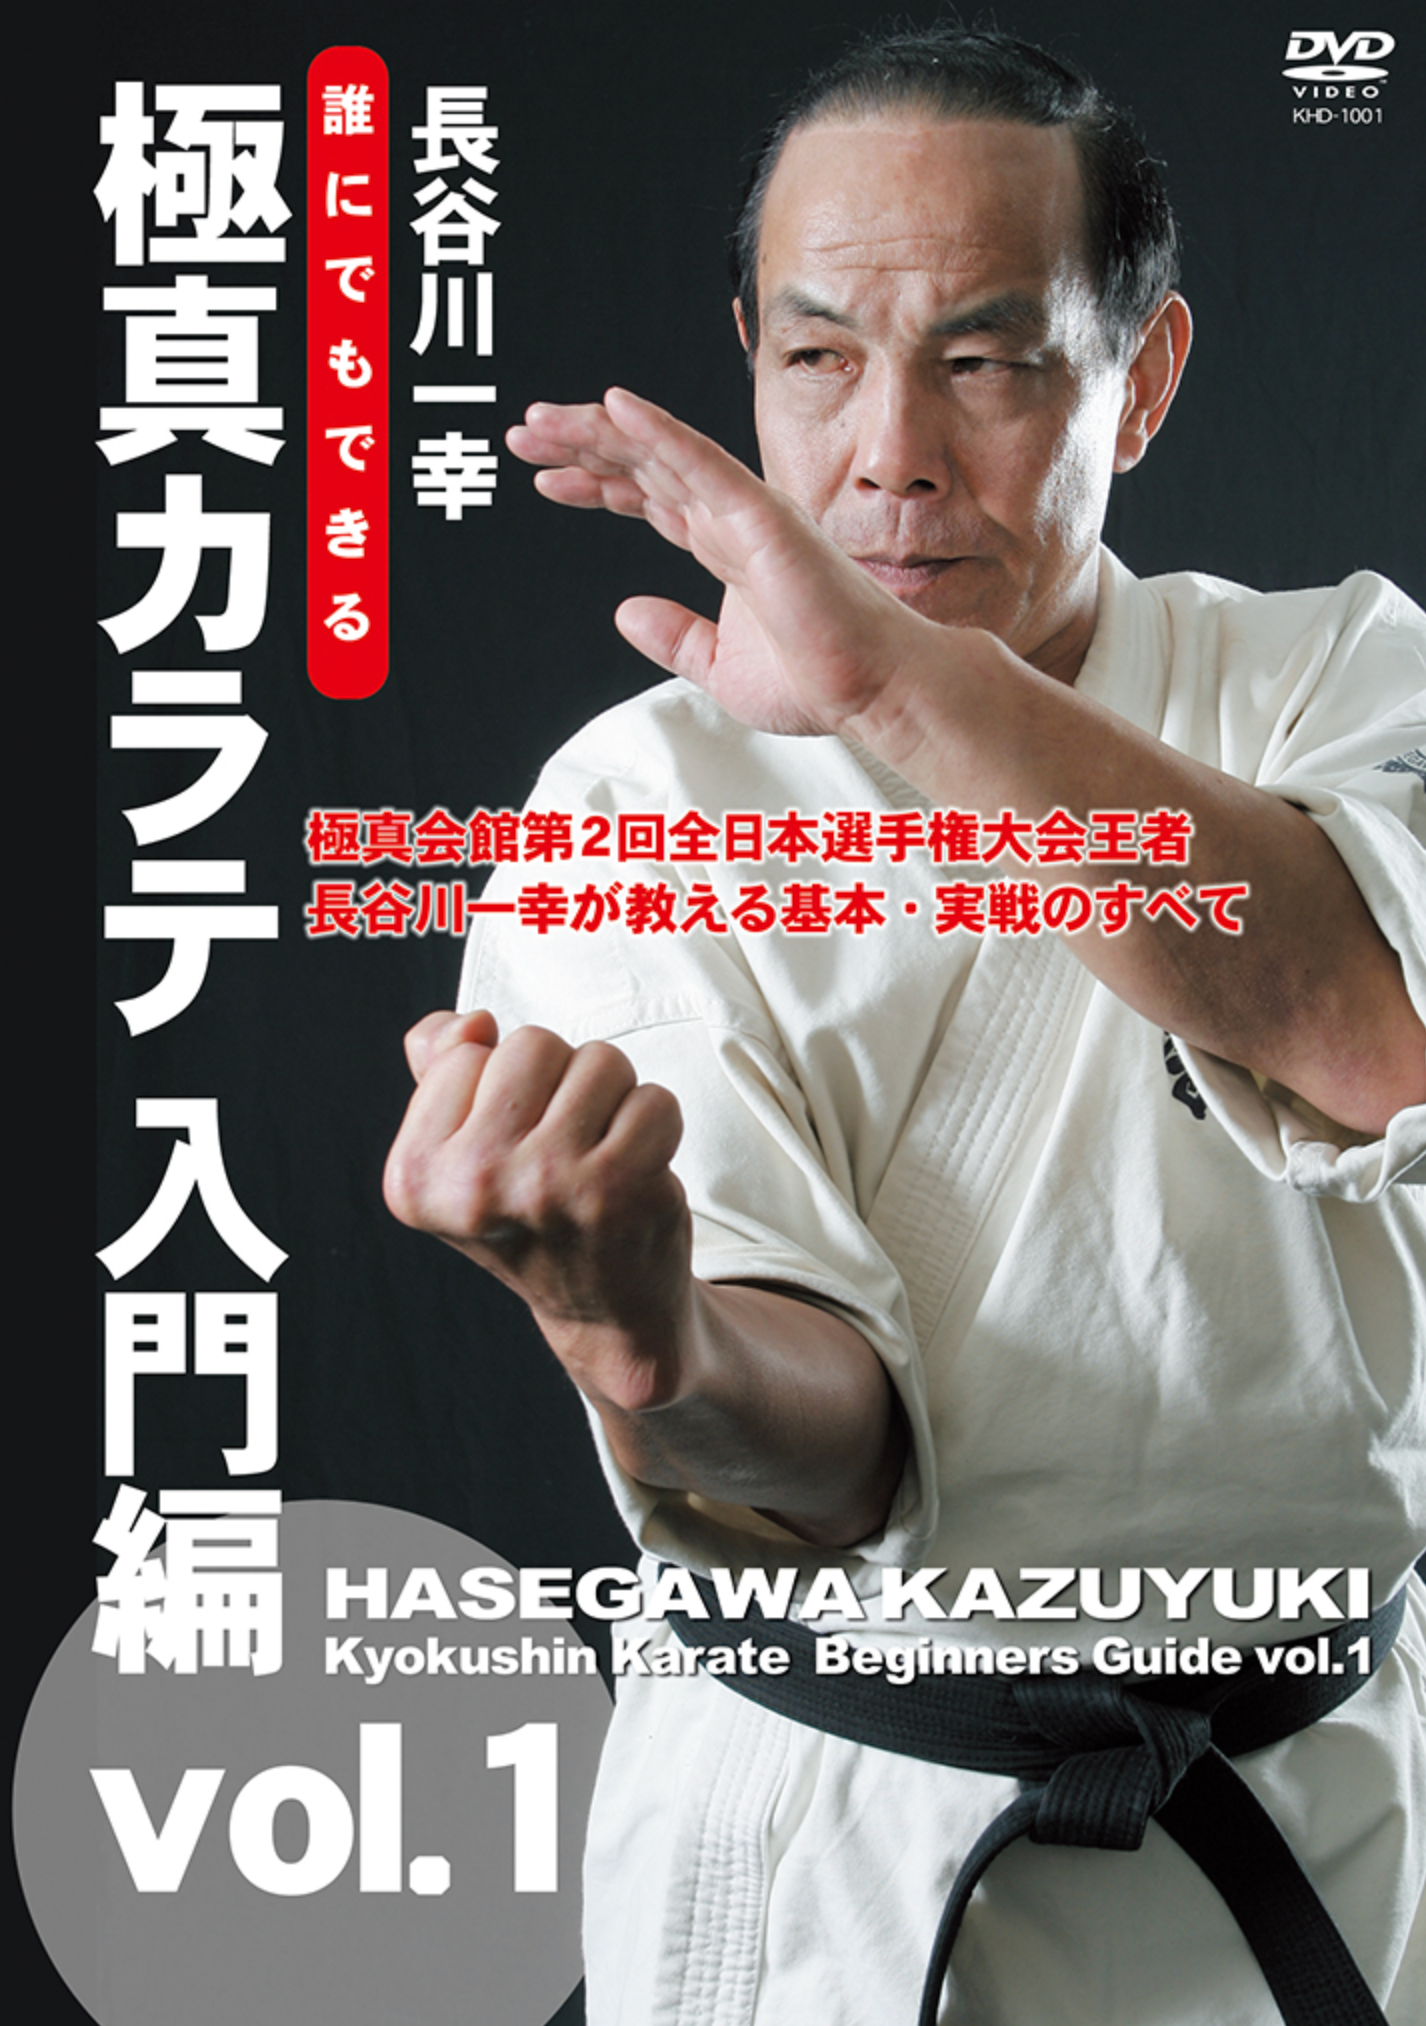 Kyokushin Karate Beginner's Guide DVD Vol 1 by Kazuyuki Hasegawa - Budovideos Inc